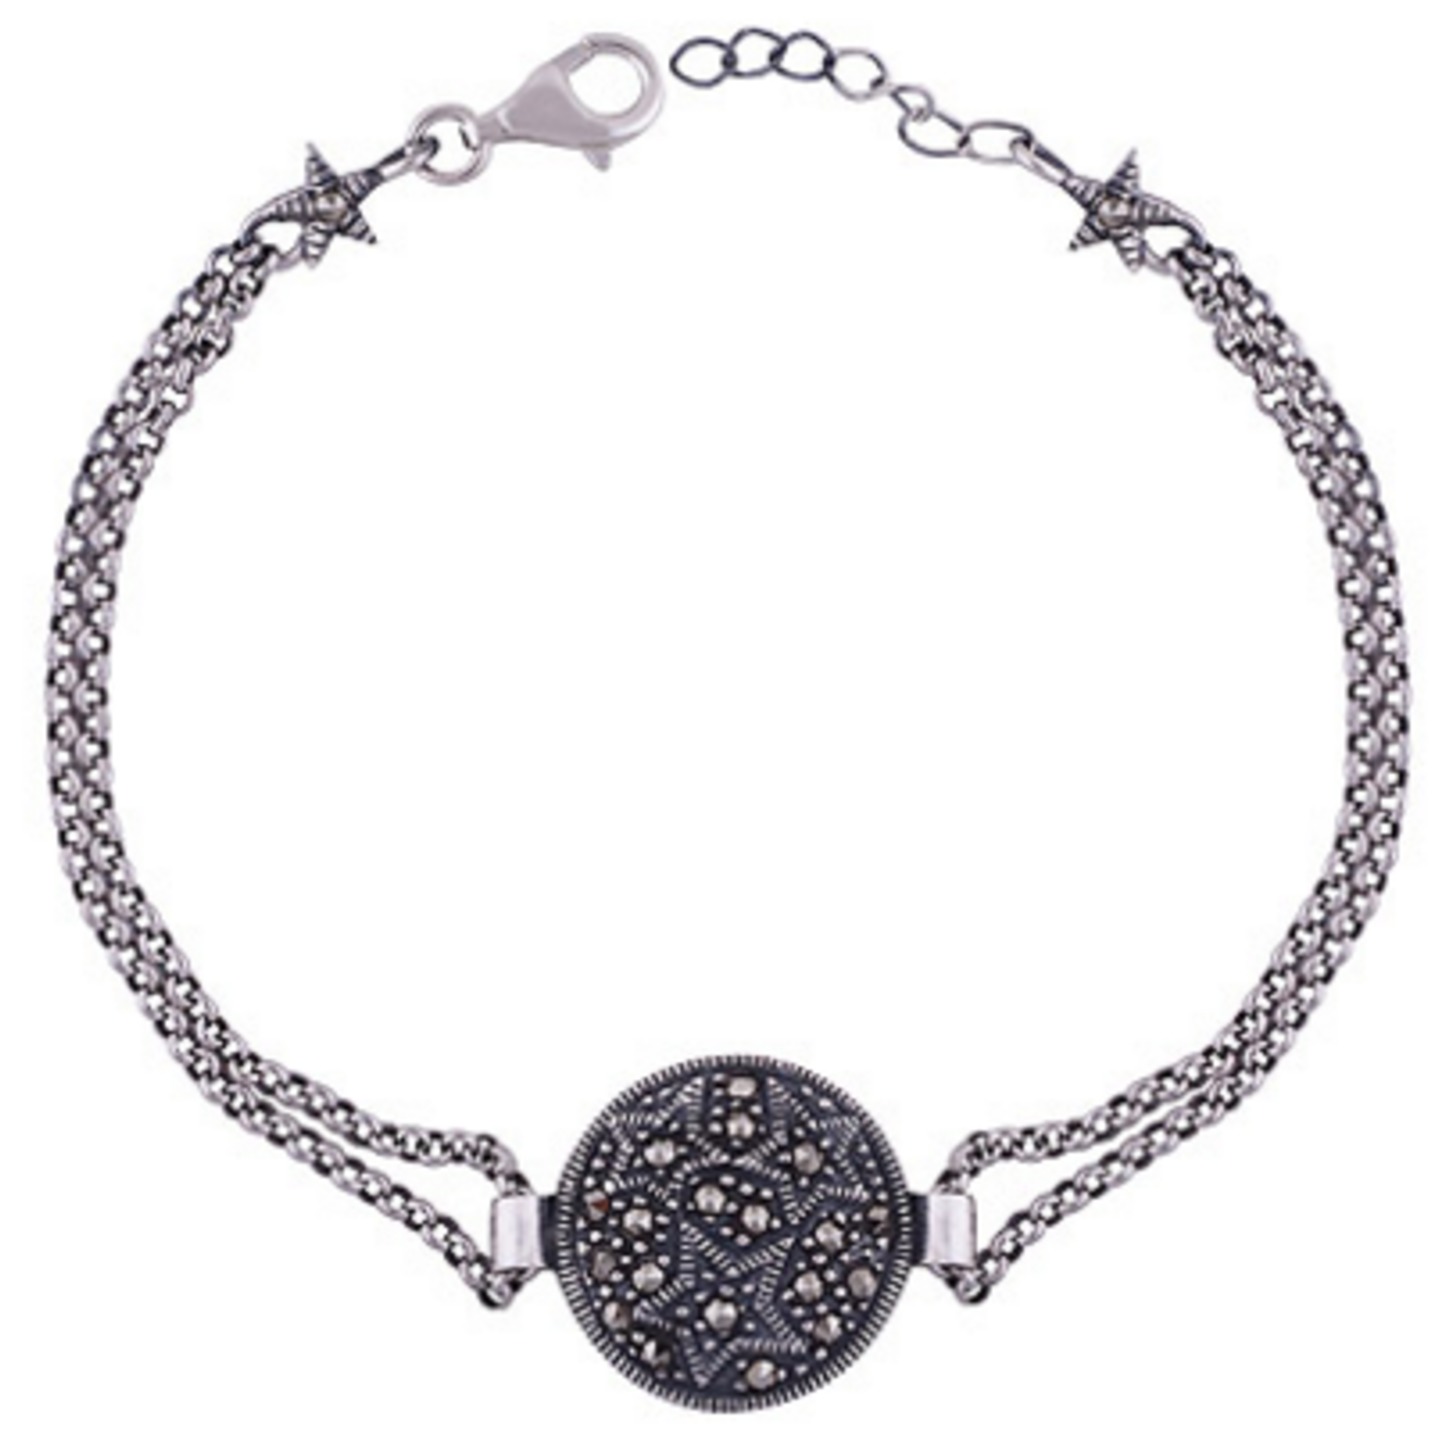 The Marcasite Silver Bracelet